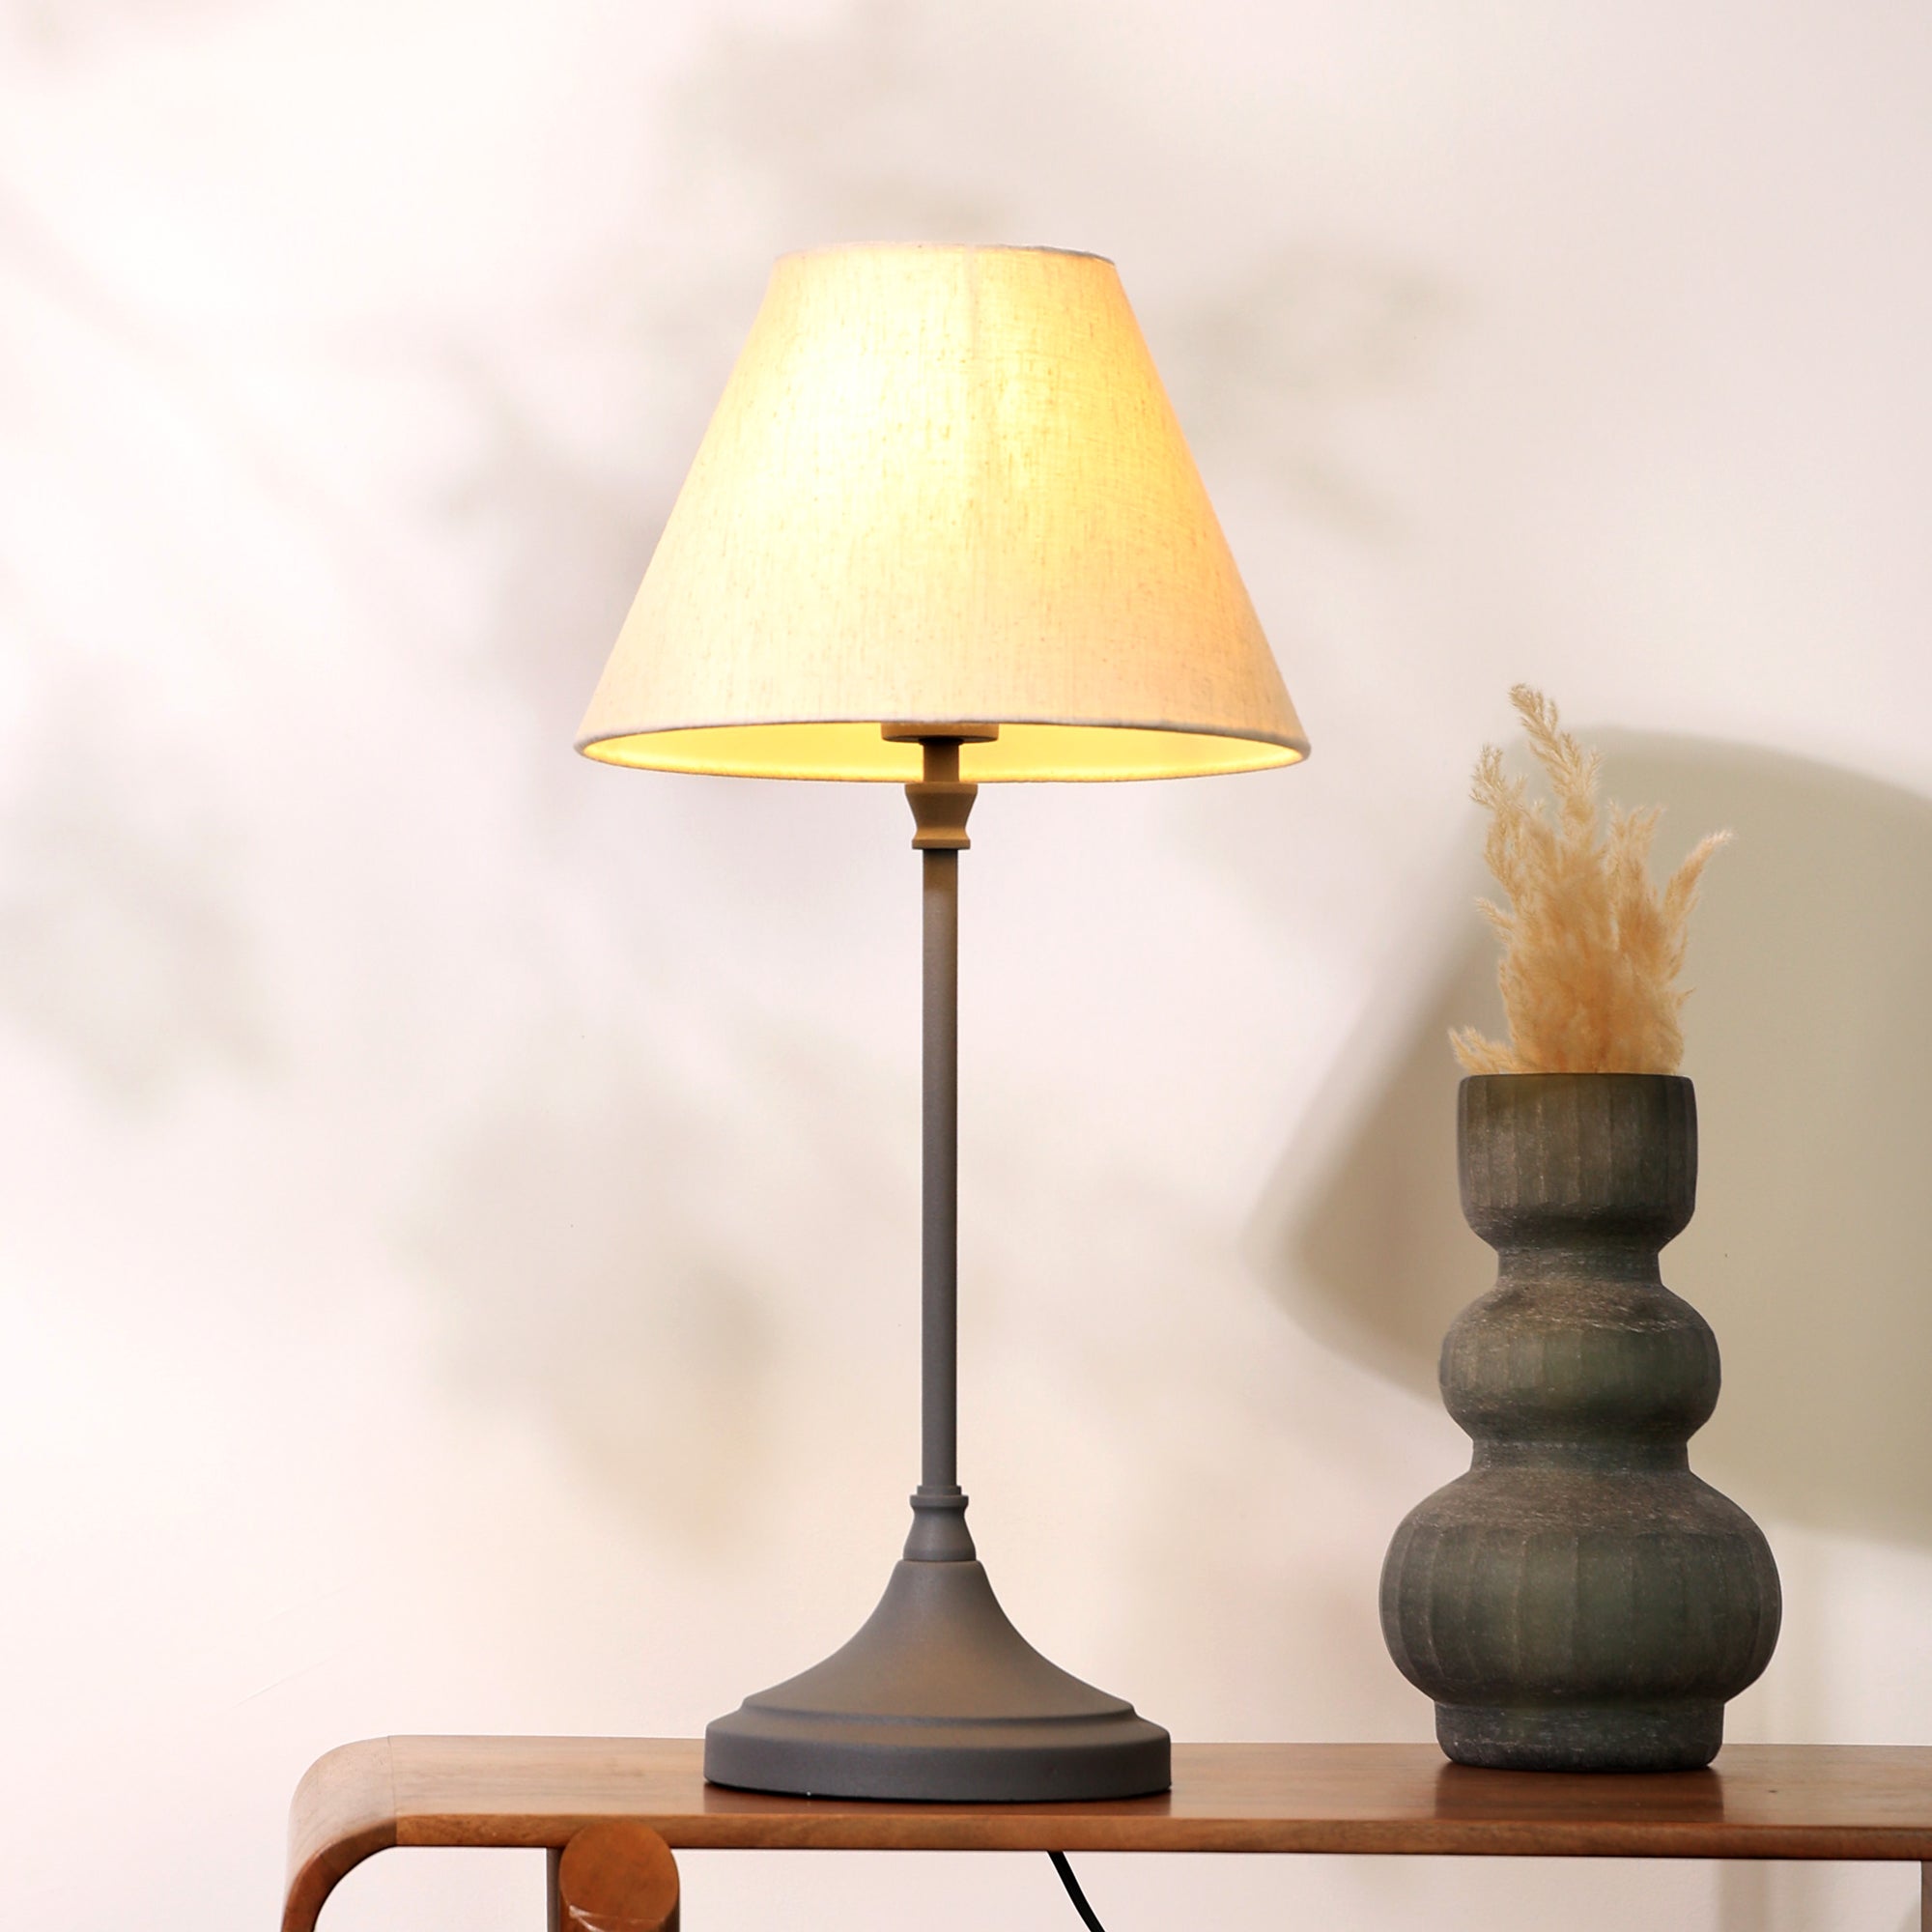 RUSTIQUE TABLE LAMP - COTTAGE CHARM, MID-CENTURY, LINEN SHADE DESK LAMP